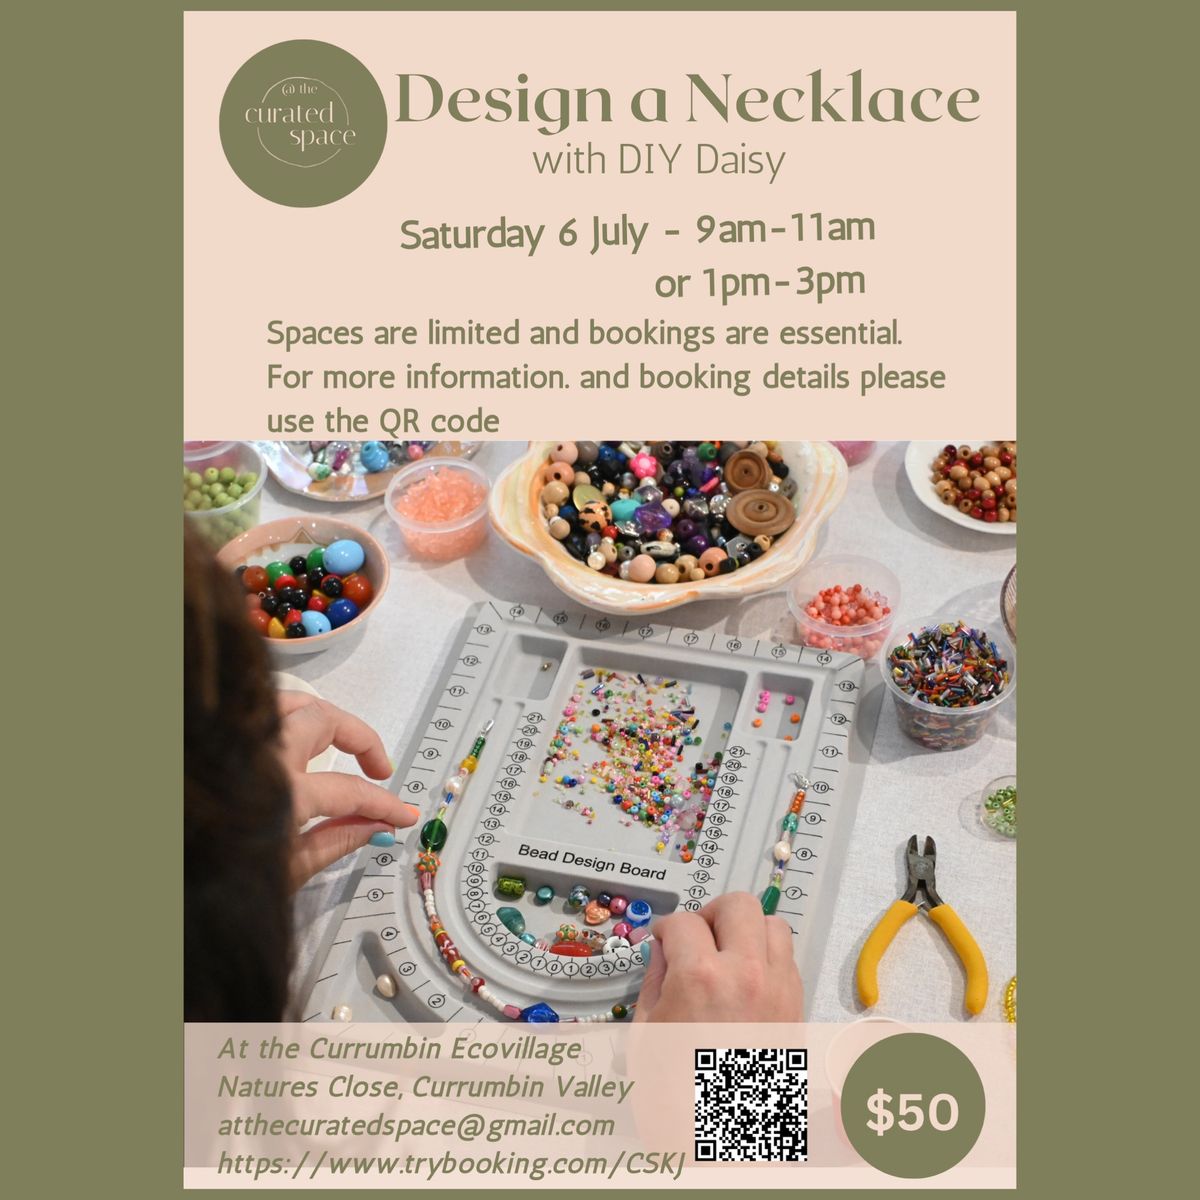 Design a necklace